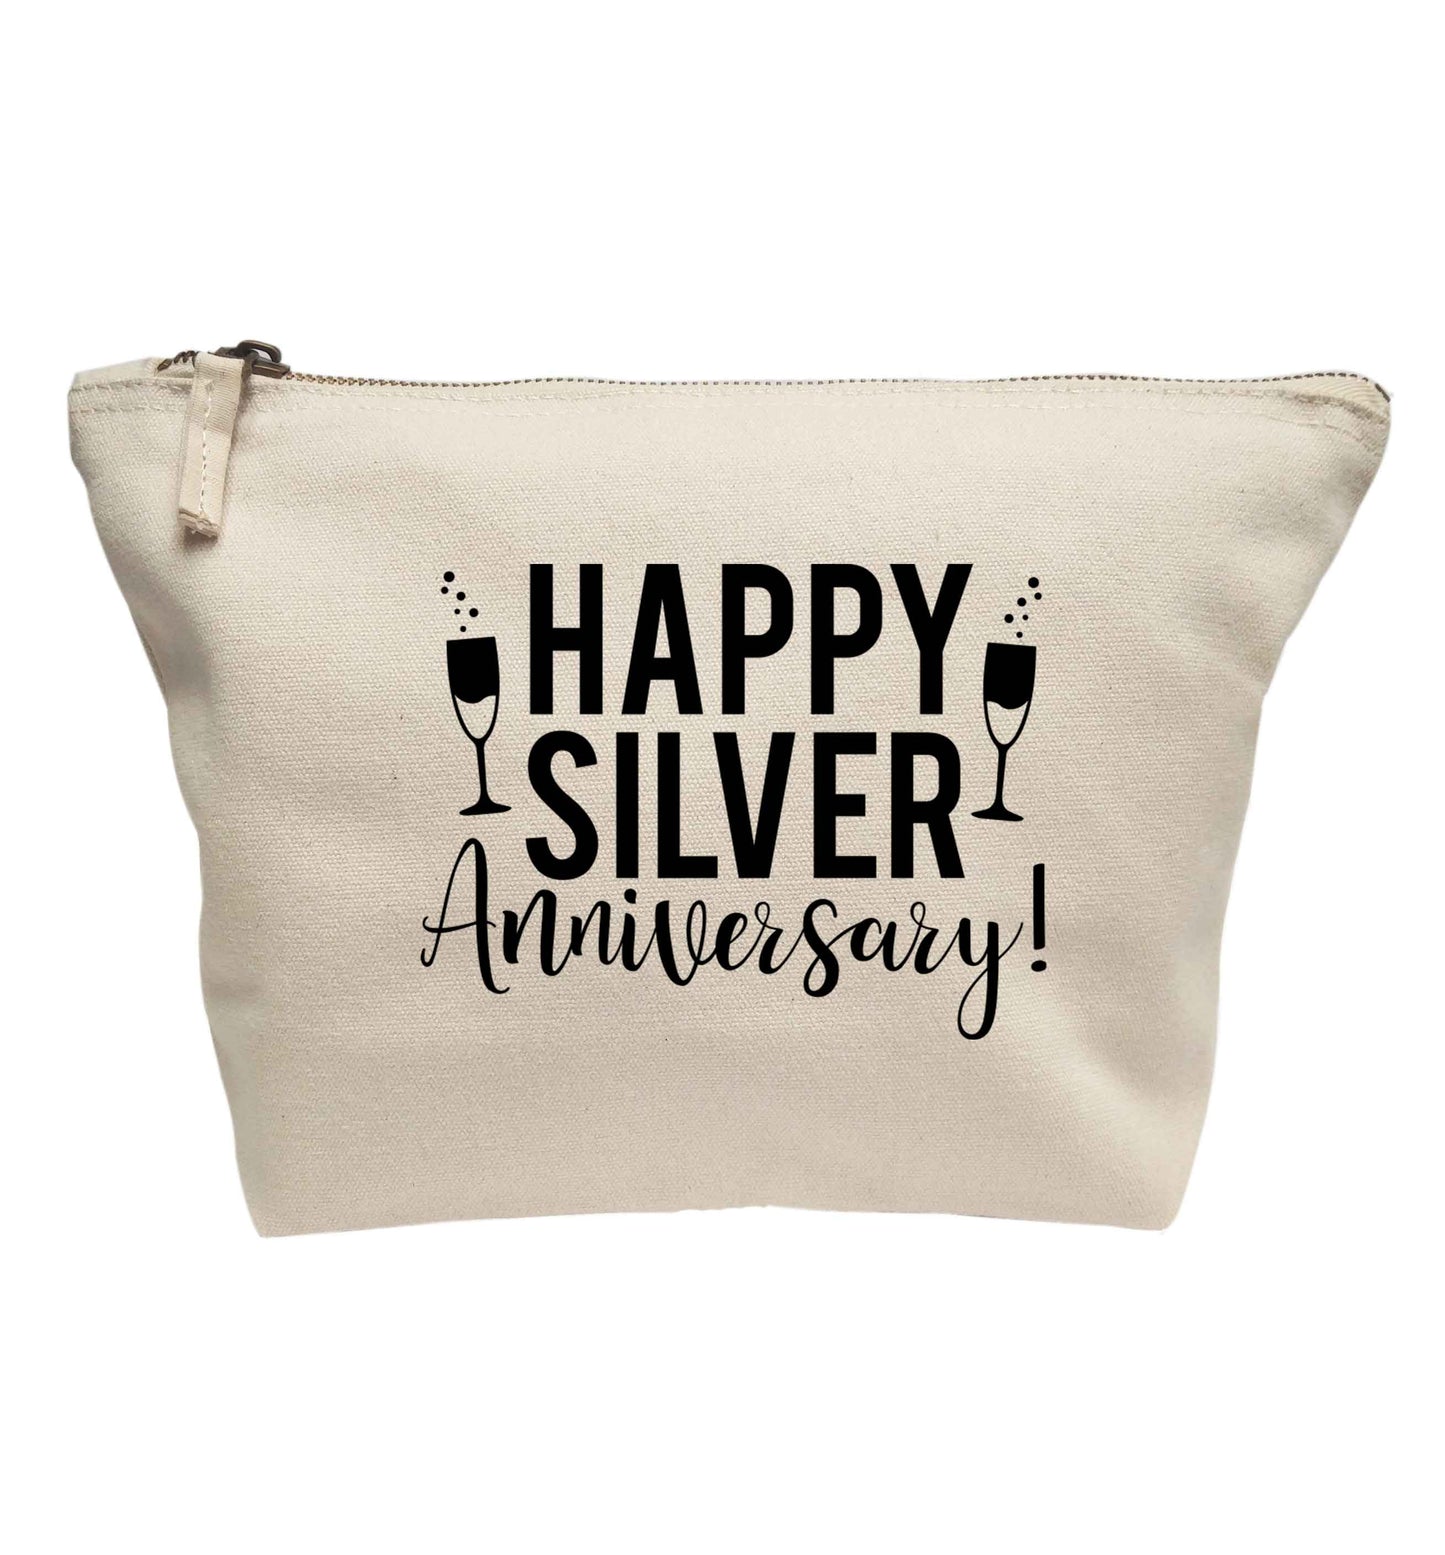 Happy silver anniversary! | Makeup / wash bag